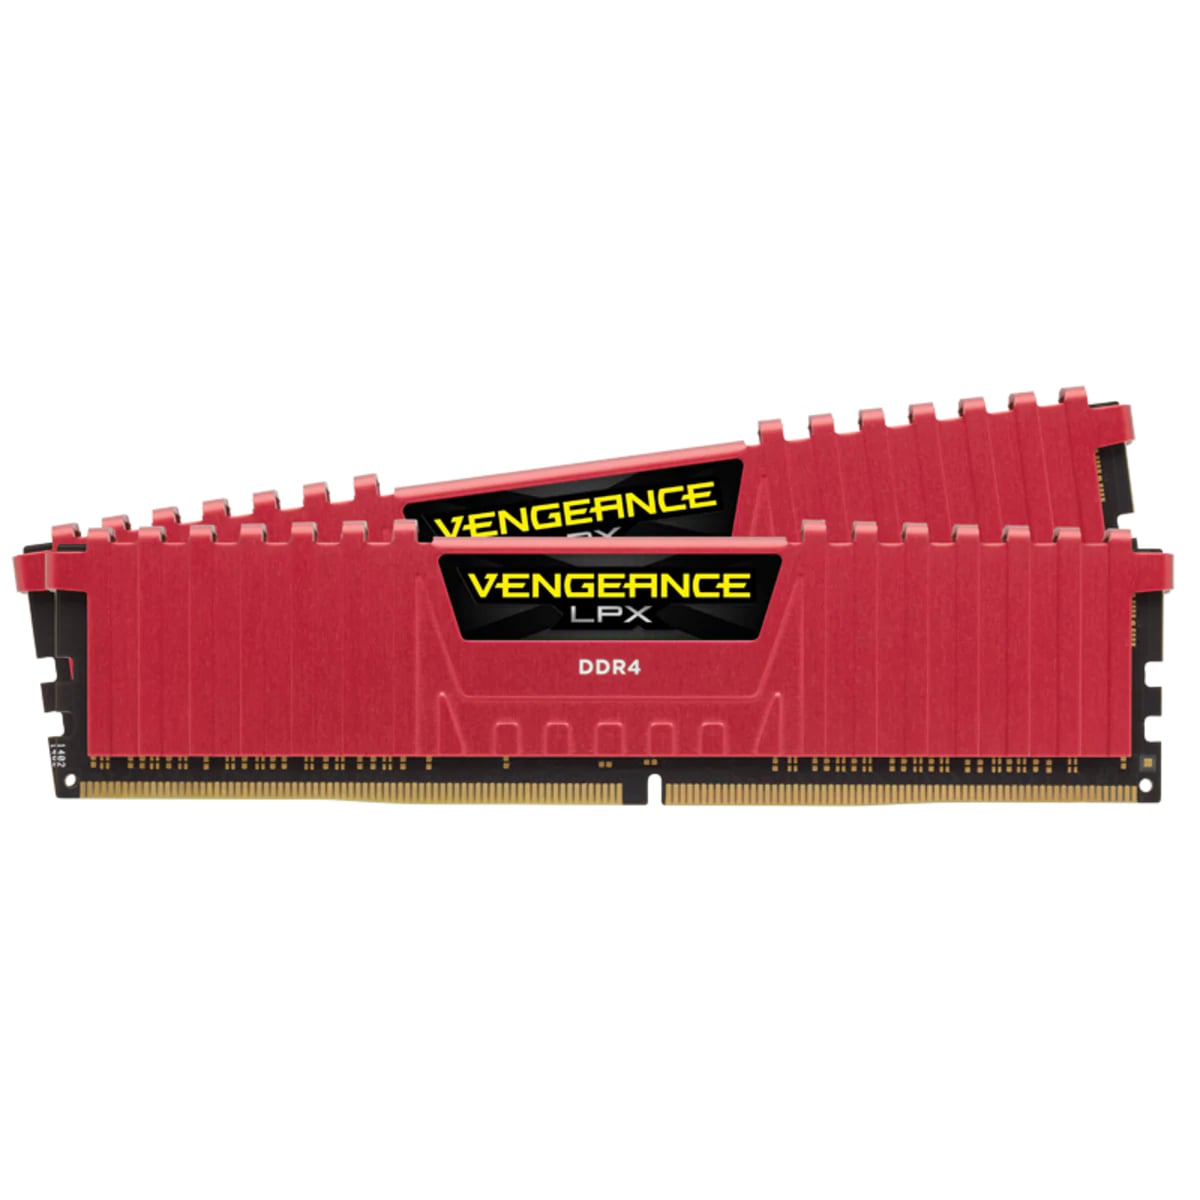 RAM CORSAIR VENGEANCE LPX 8GB (2x4GB) DDR4 2400MHz (RED) - CMK8GX4M2A2400C14R - songphuong.vn